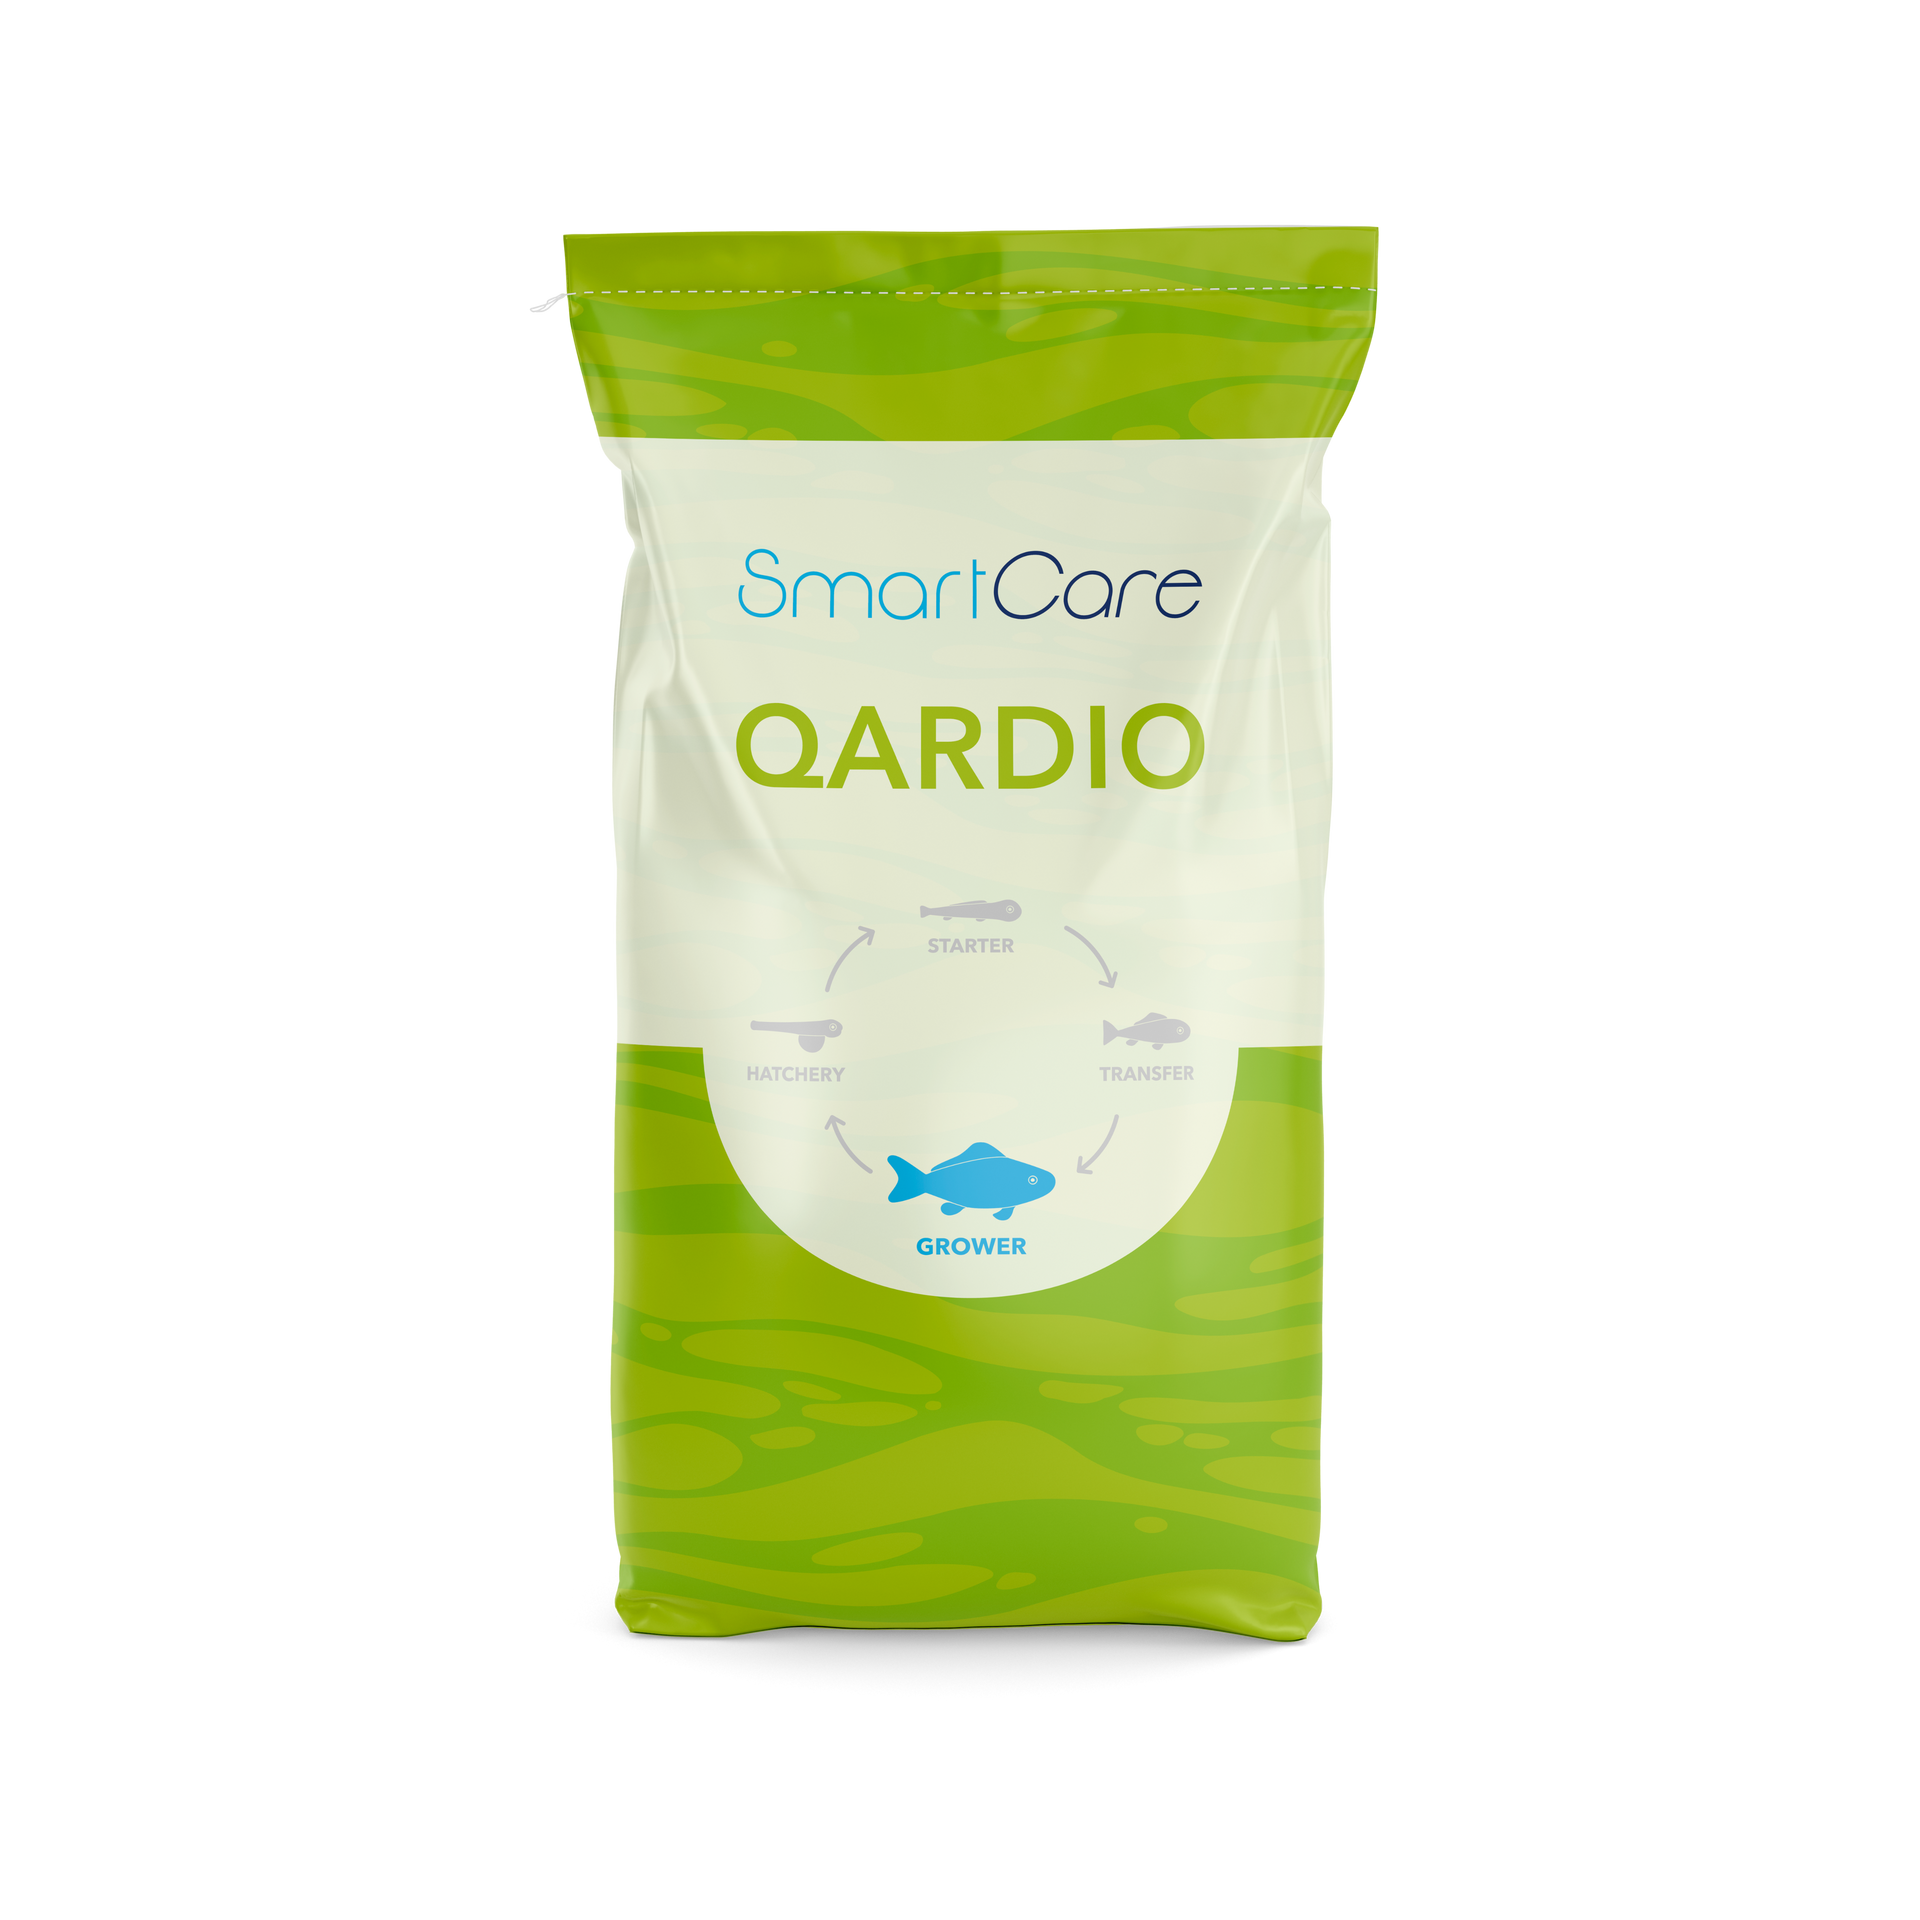 SmartCare Qardio health feed for atlantic salmon